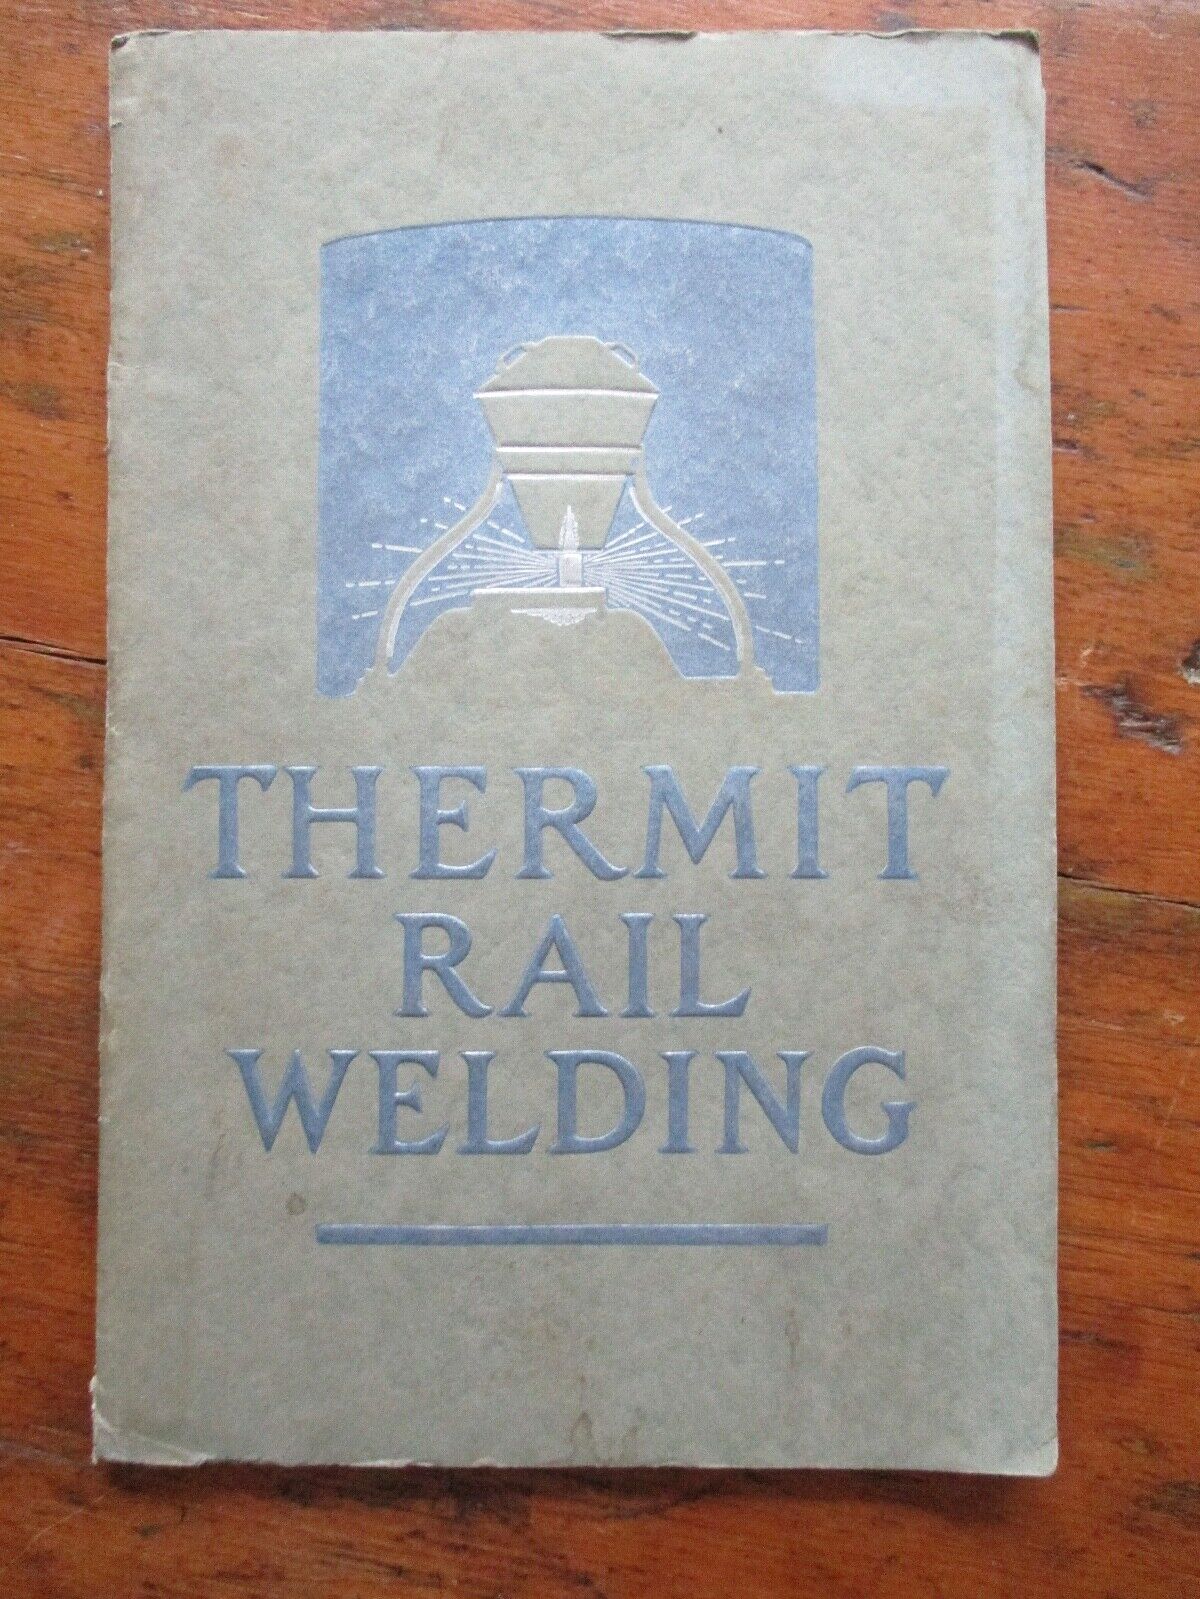 original 1916 advertising booklet THERMIT RAIL WELDING GOLDSCHMIDT THERMIT CO.